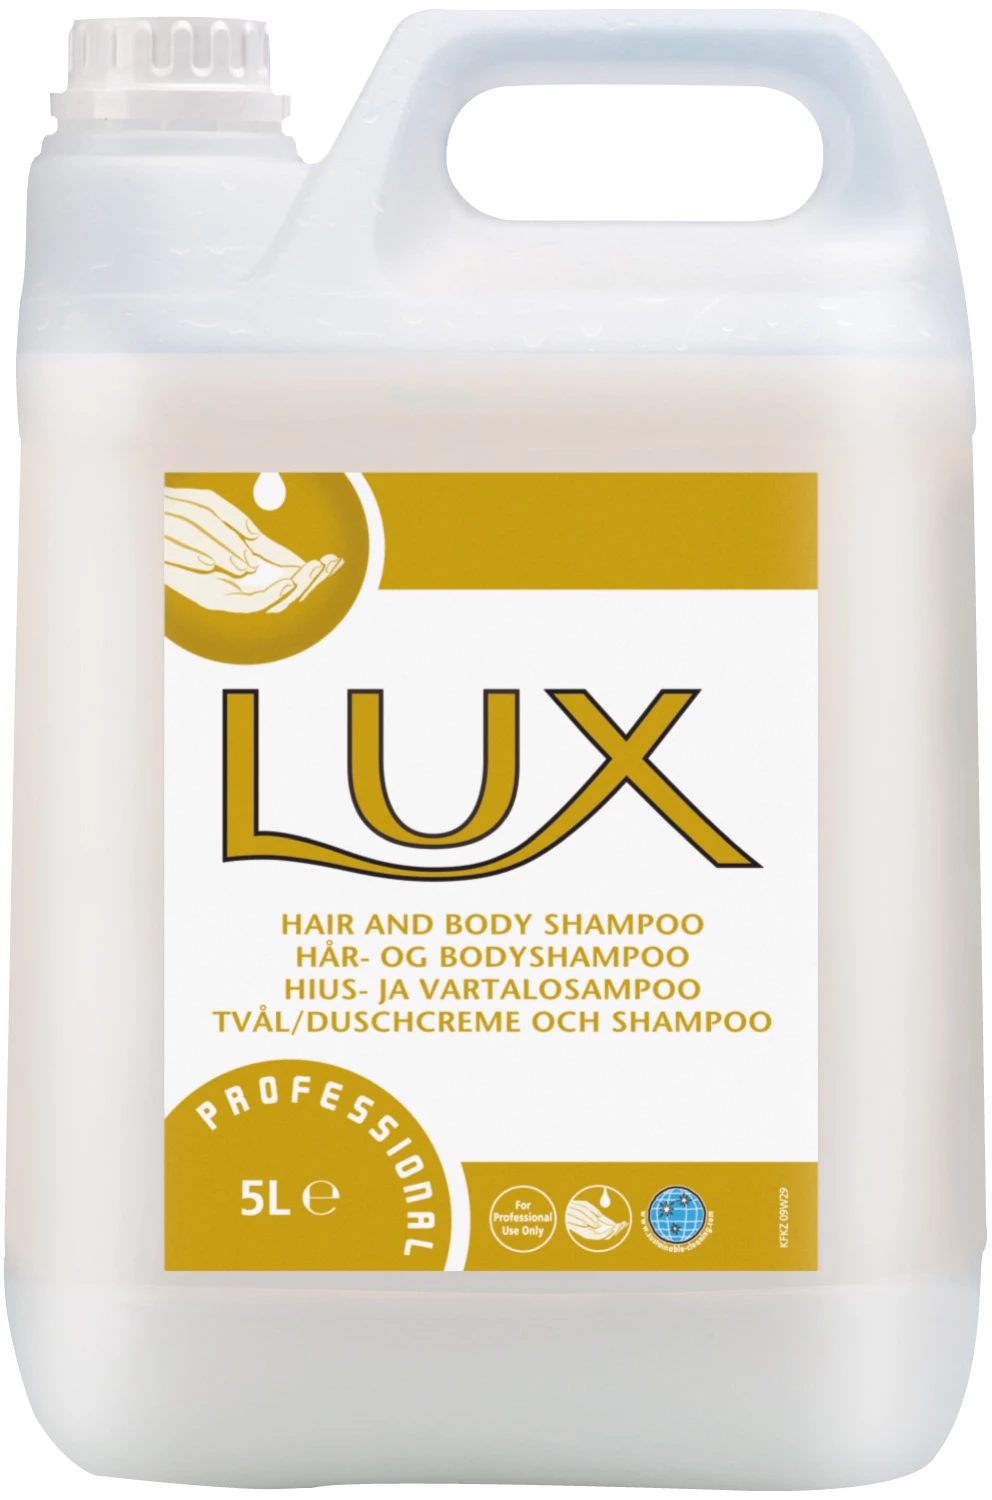 Hair & Body Lux Professional 2in1 5L 2st/kolli